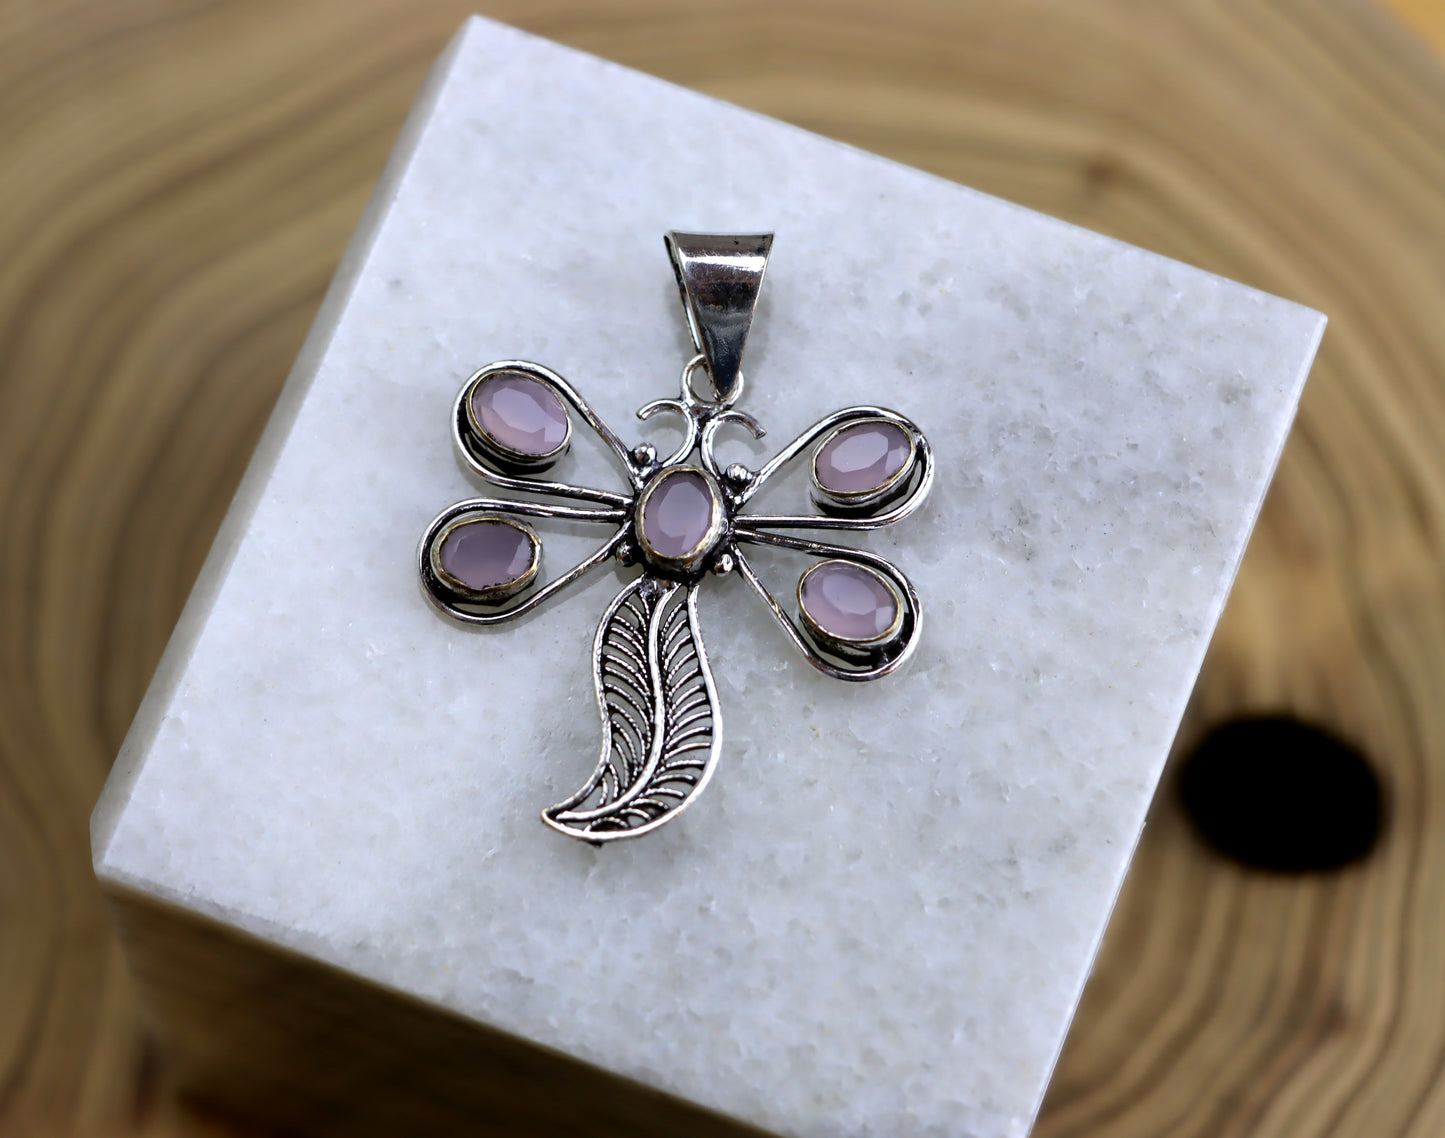 Dragonfly rosary pendant